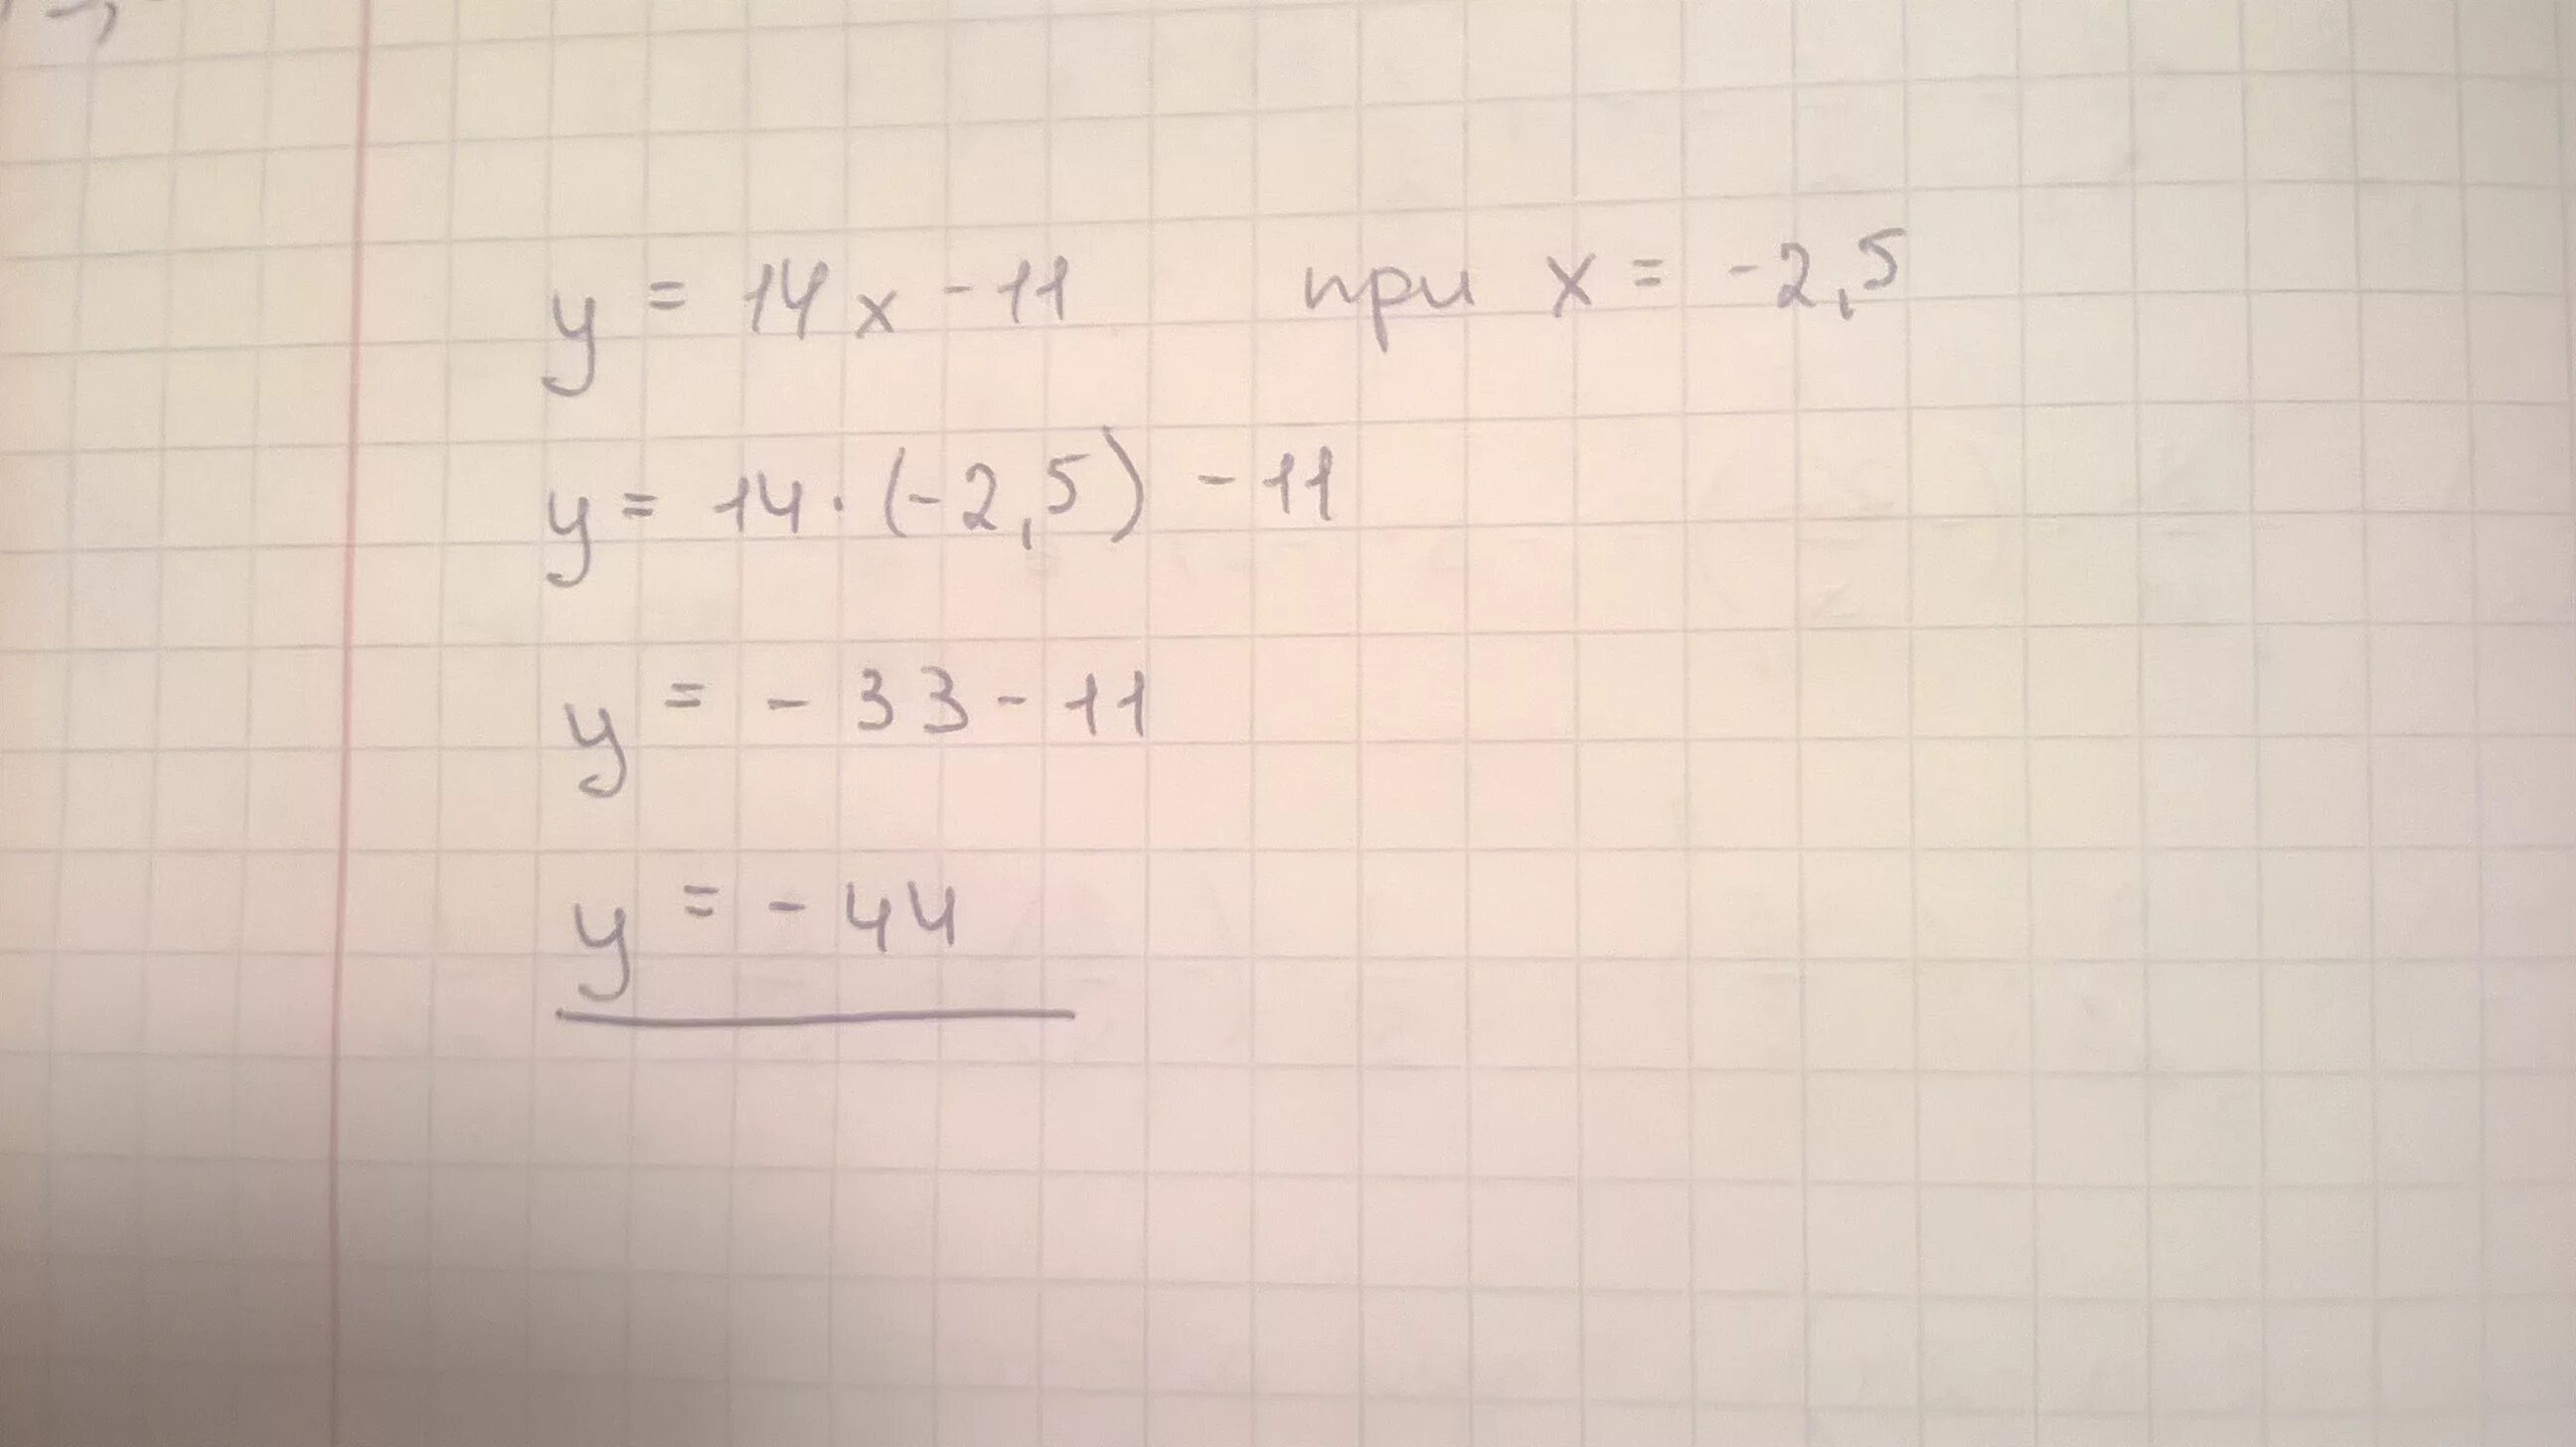 X 18 x 14 0. Функция заданной формулой y 4x-30. Функция задана формулой y=-2.5. Функция задана формулой y 2x-15. Функция задана формулой y 4x-30.